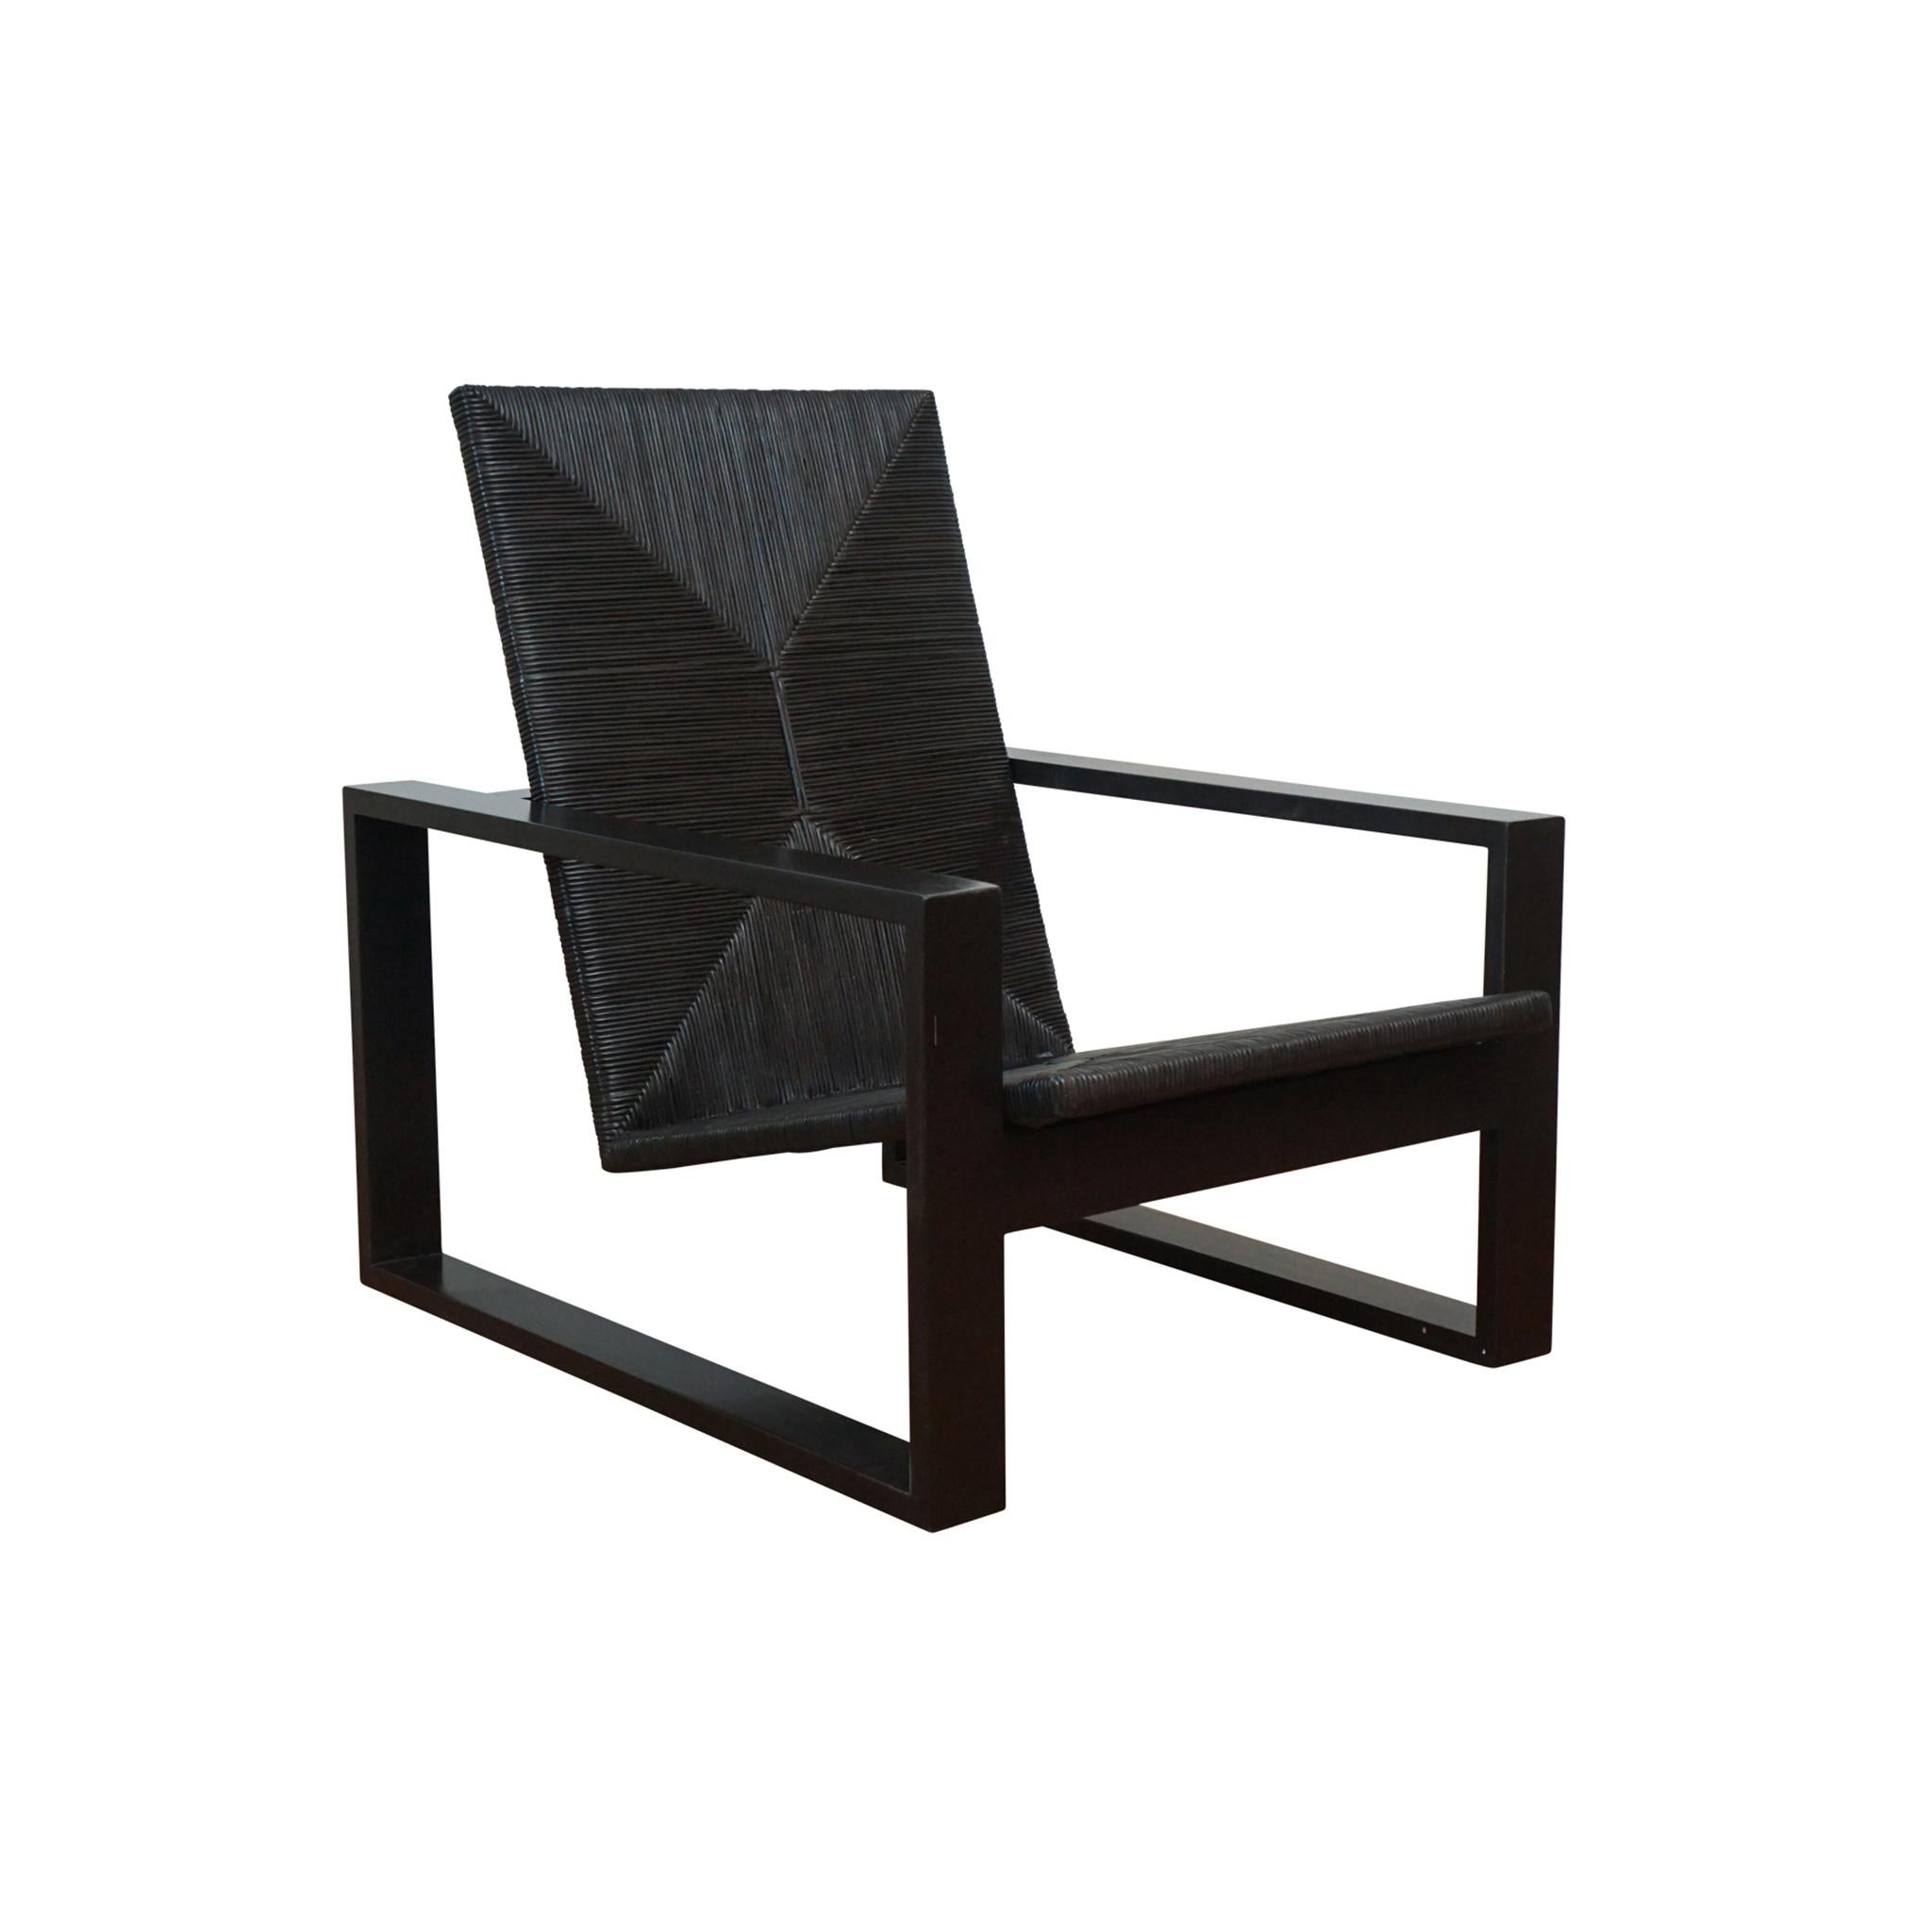 Bauhaus Wood and braided abaca chair 